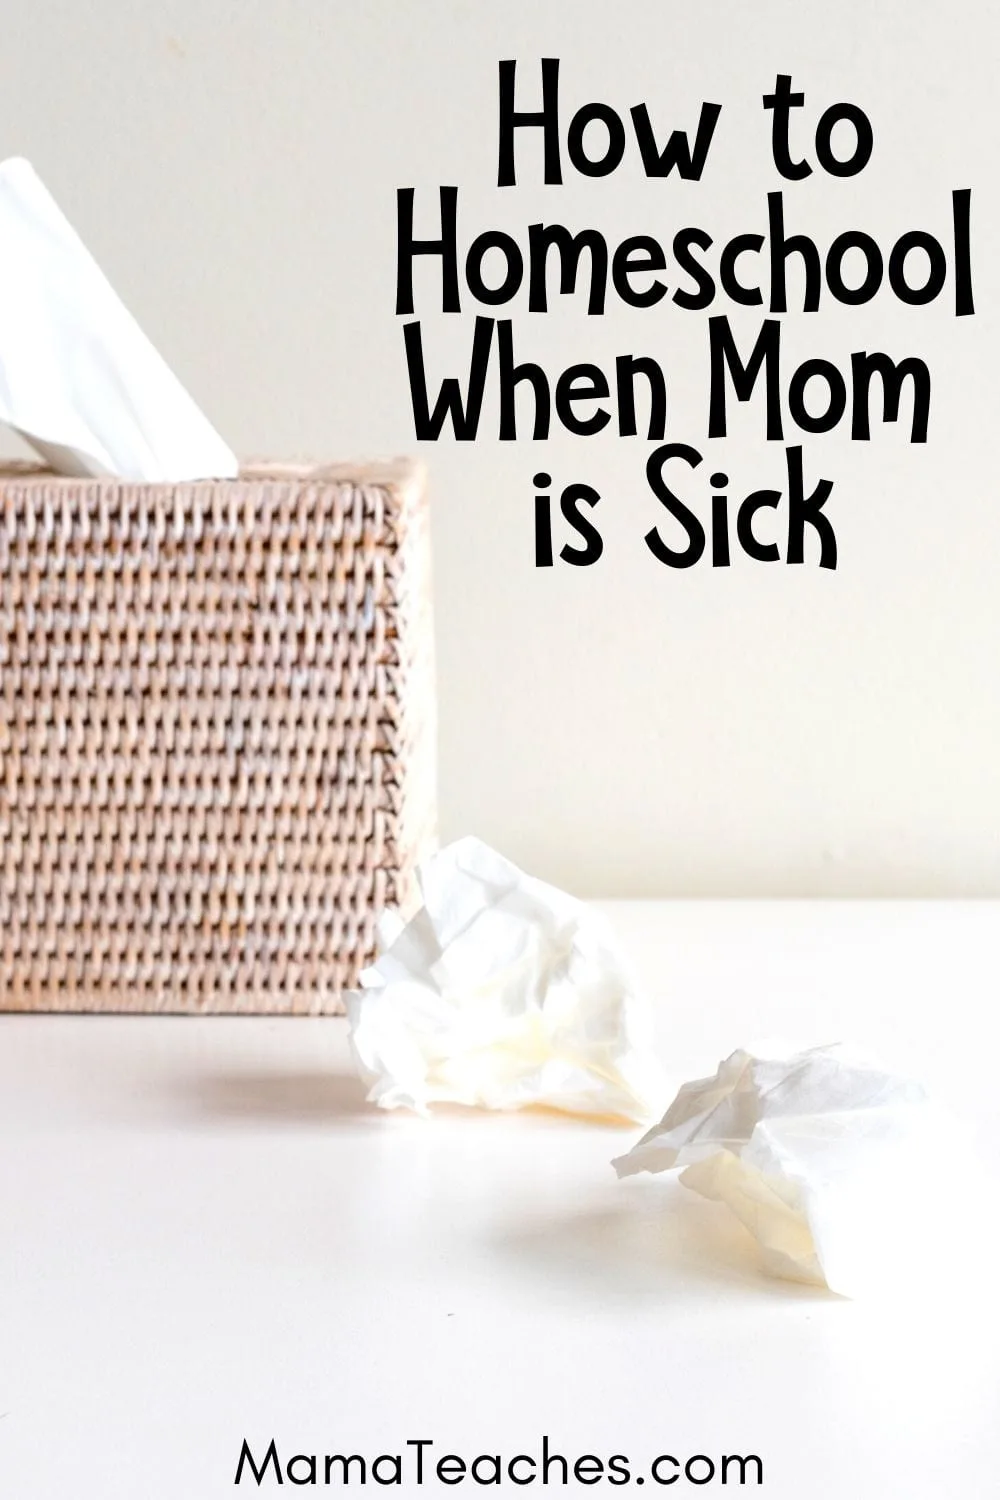 How to Homeschool When Mom is Sick